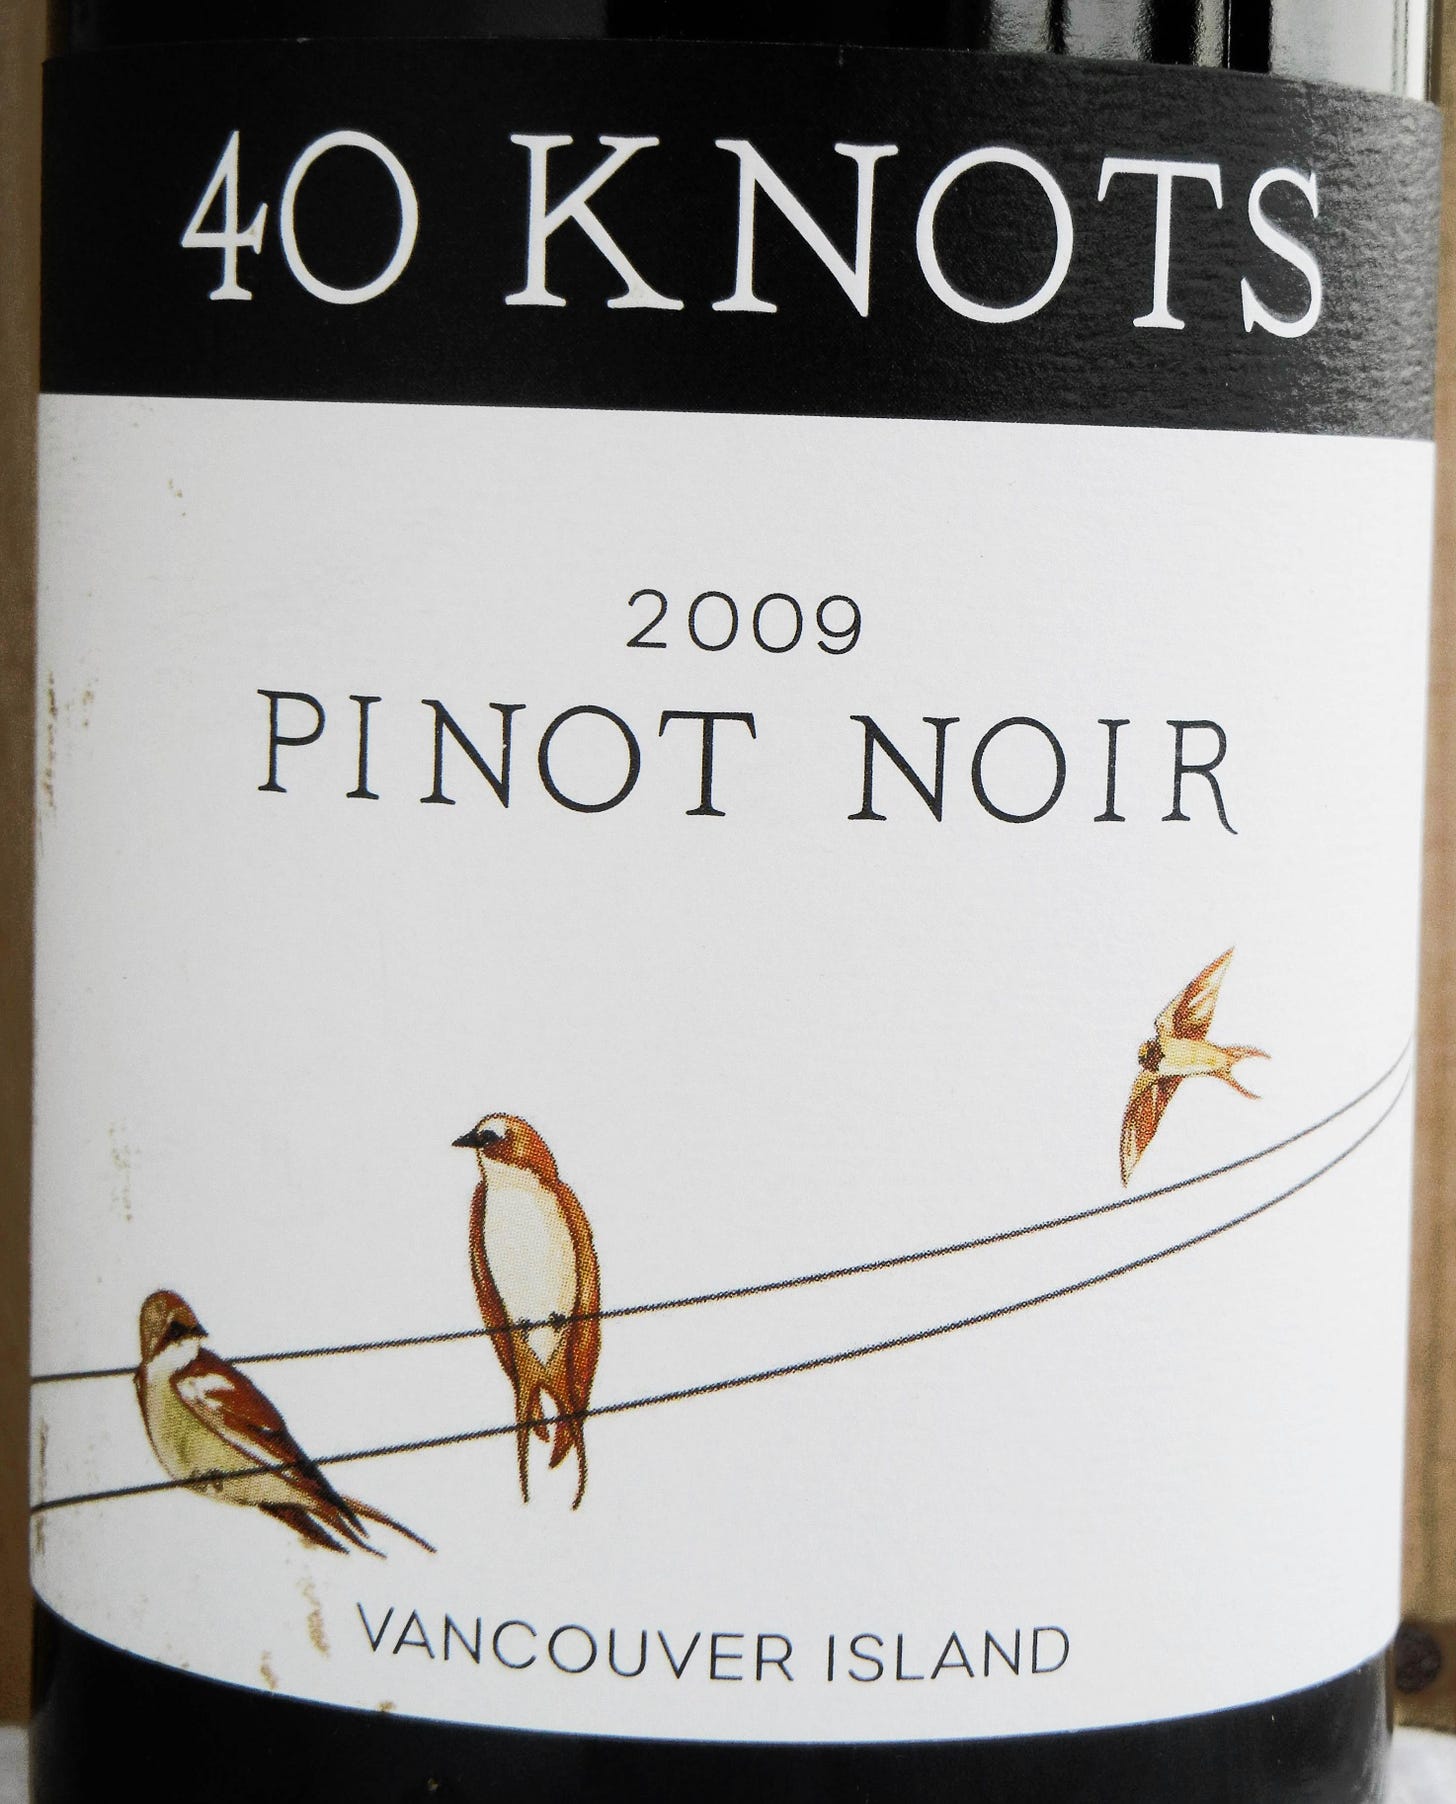 40 Knots Pinot Noir 2009 Label - BC Pinot Noir Tasting Review 15 